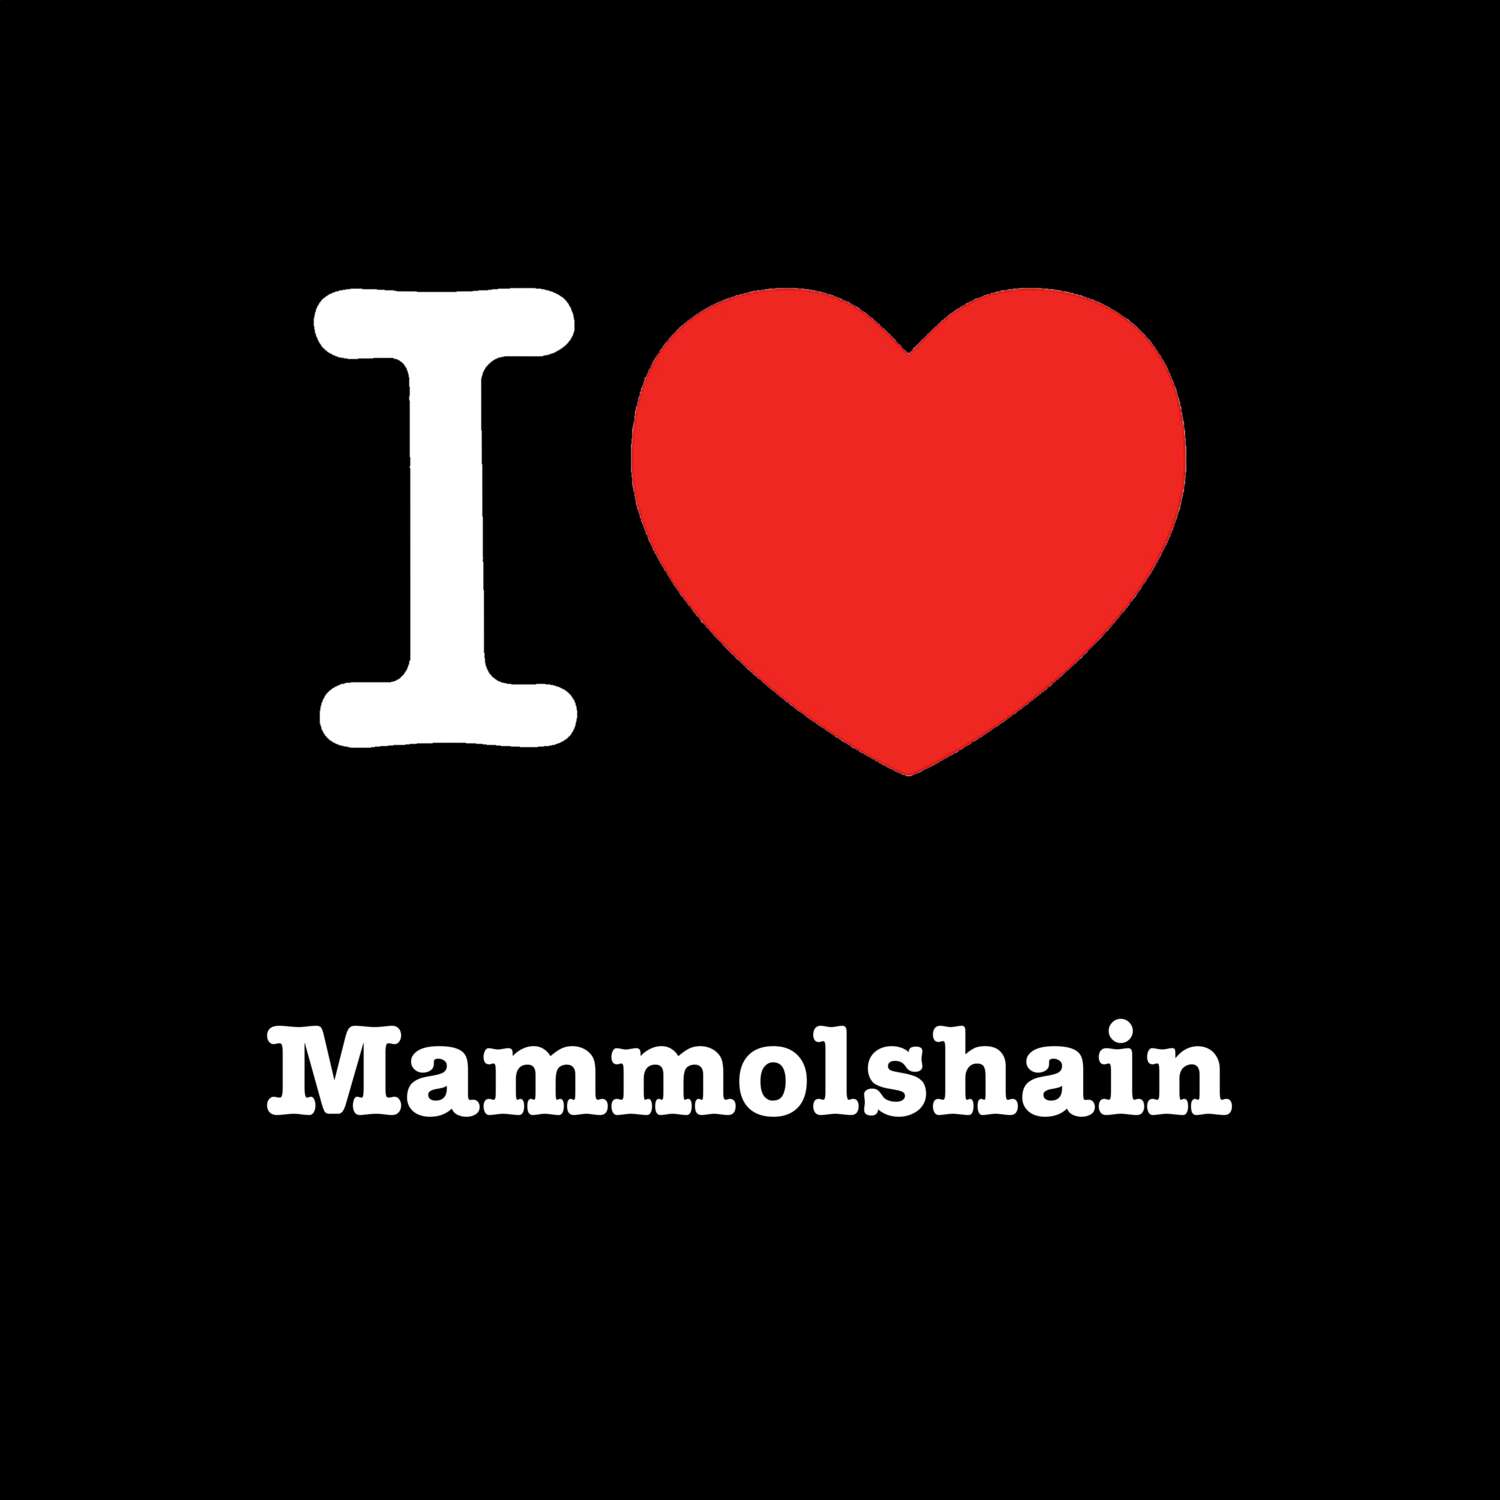 Mammolshain T-Shirt »I love«